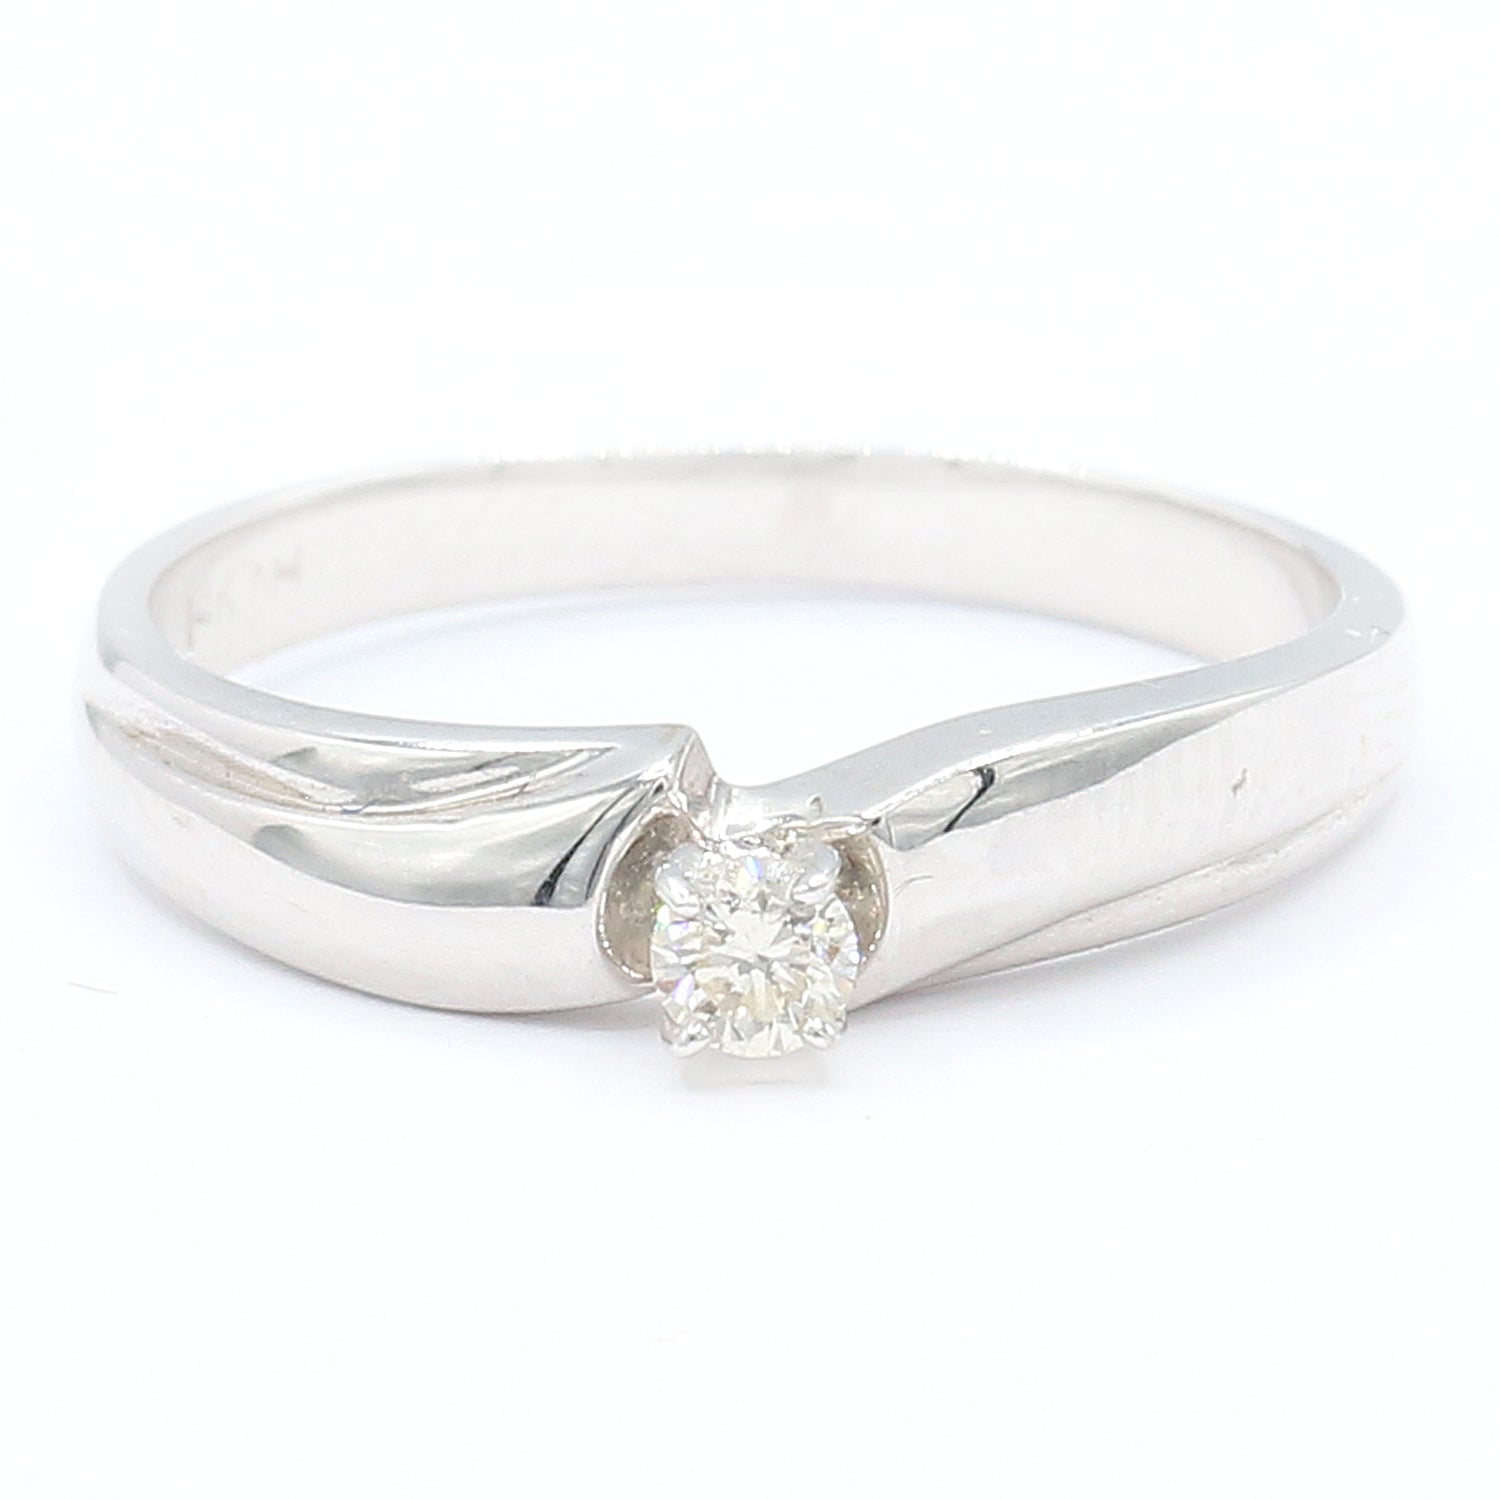 Golden Jewel 14K White Gold 0.15ctw Diamond Solitaire Ring